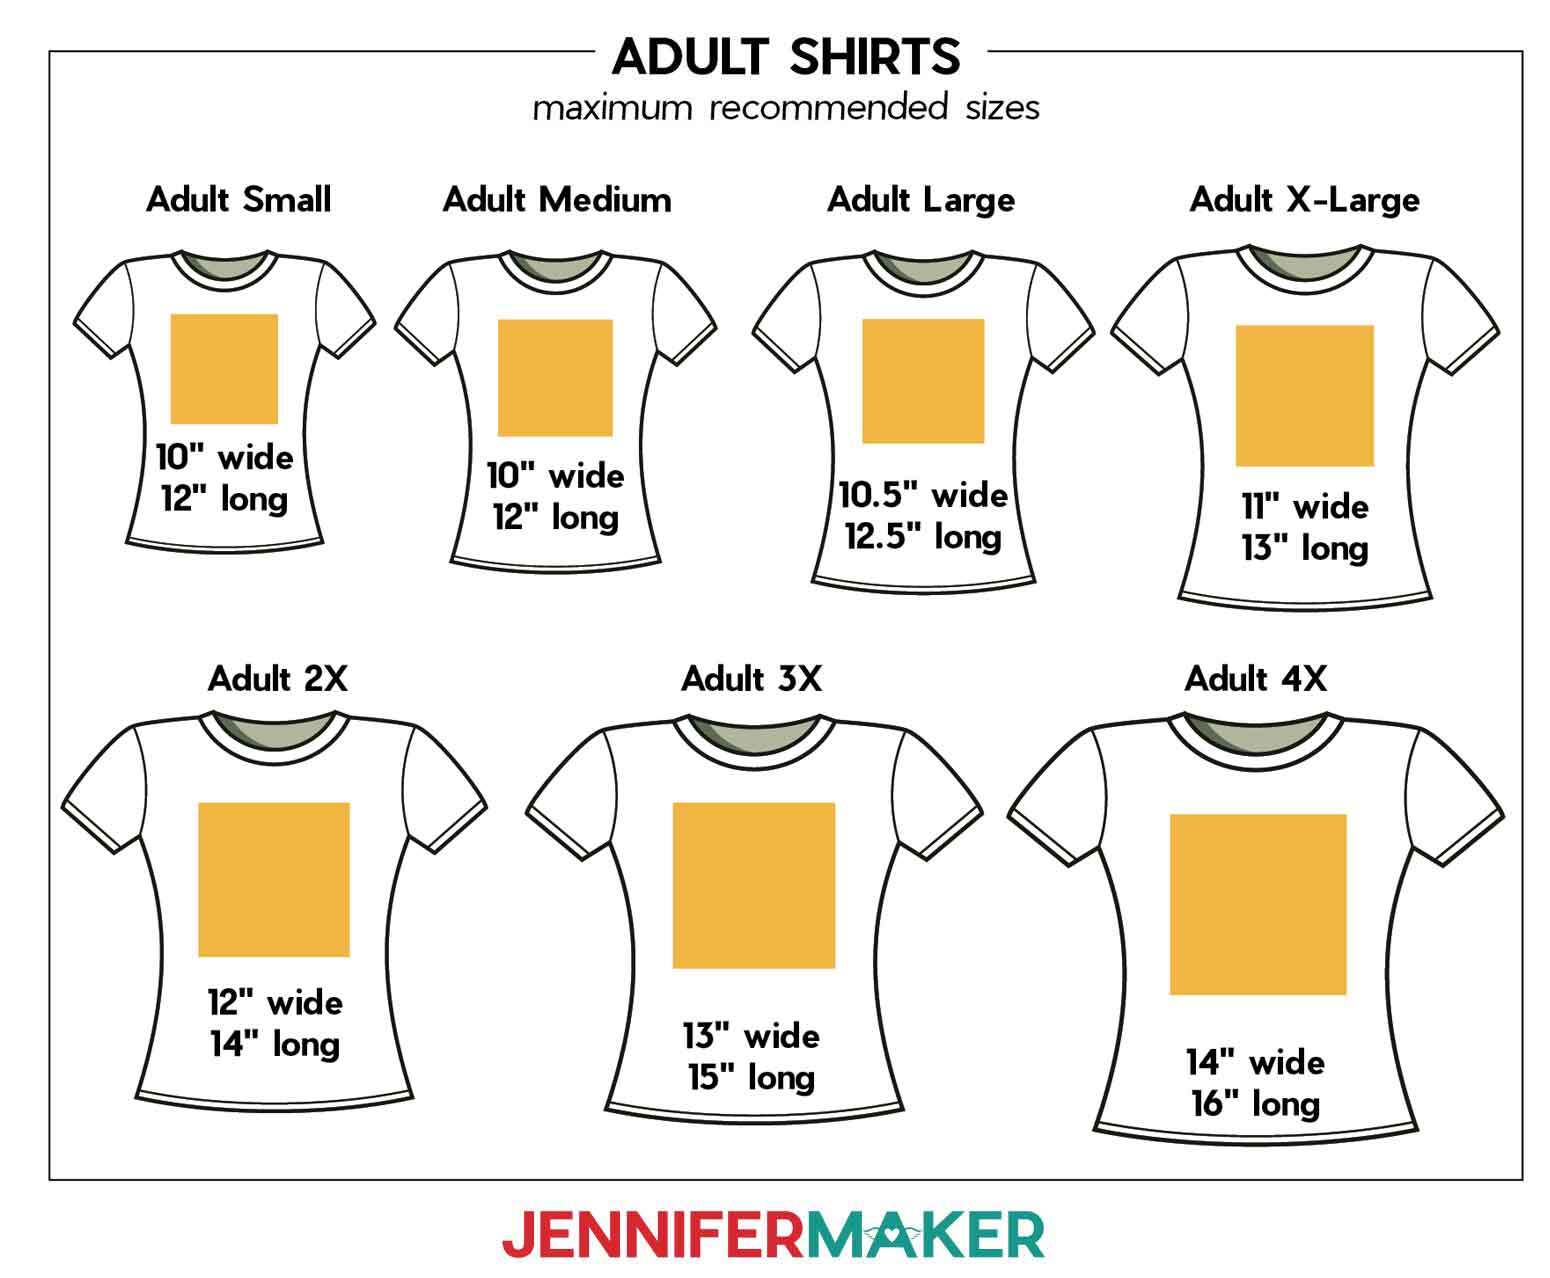 T-Shirt Rulers - Jennifer Maker